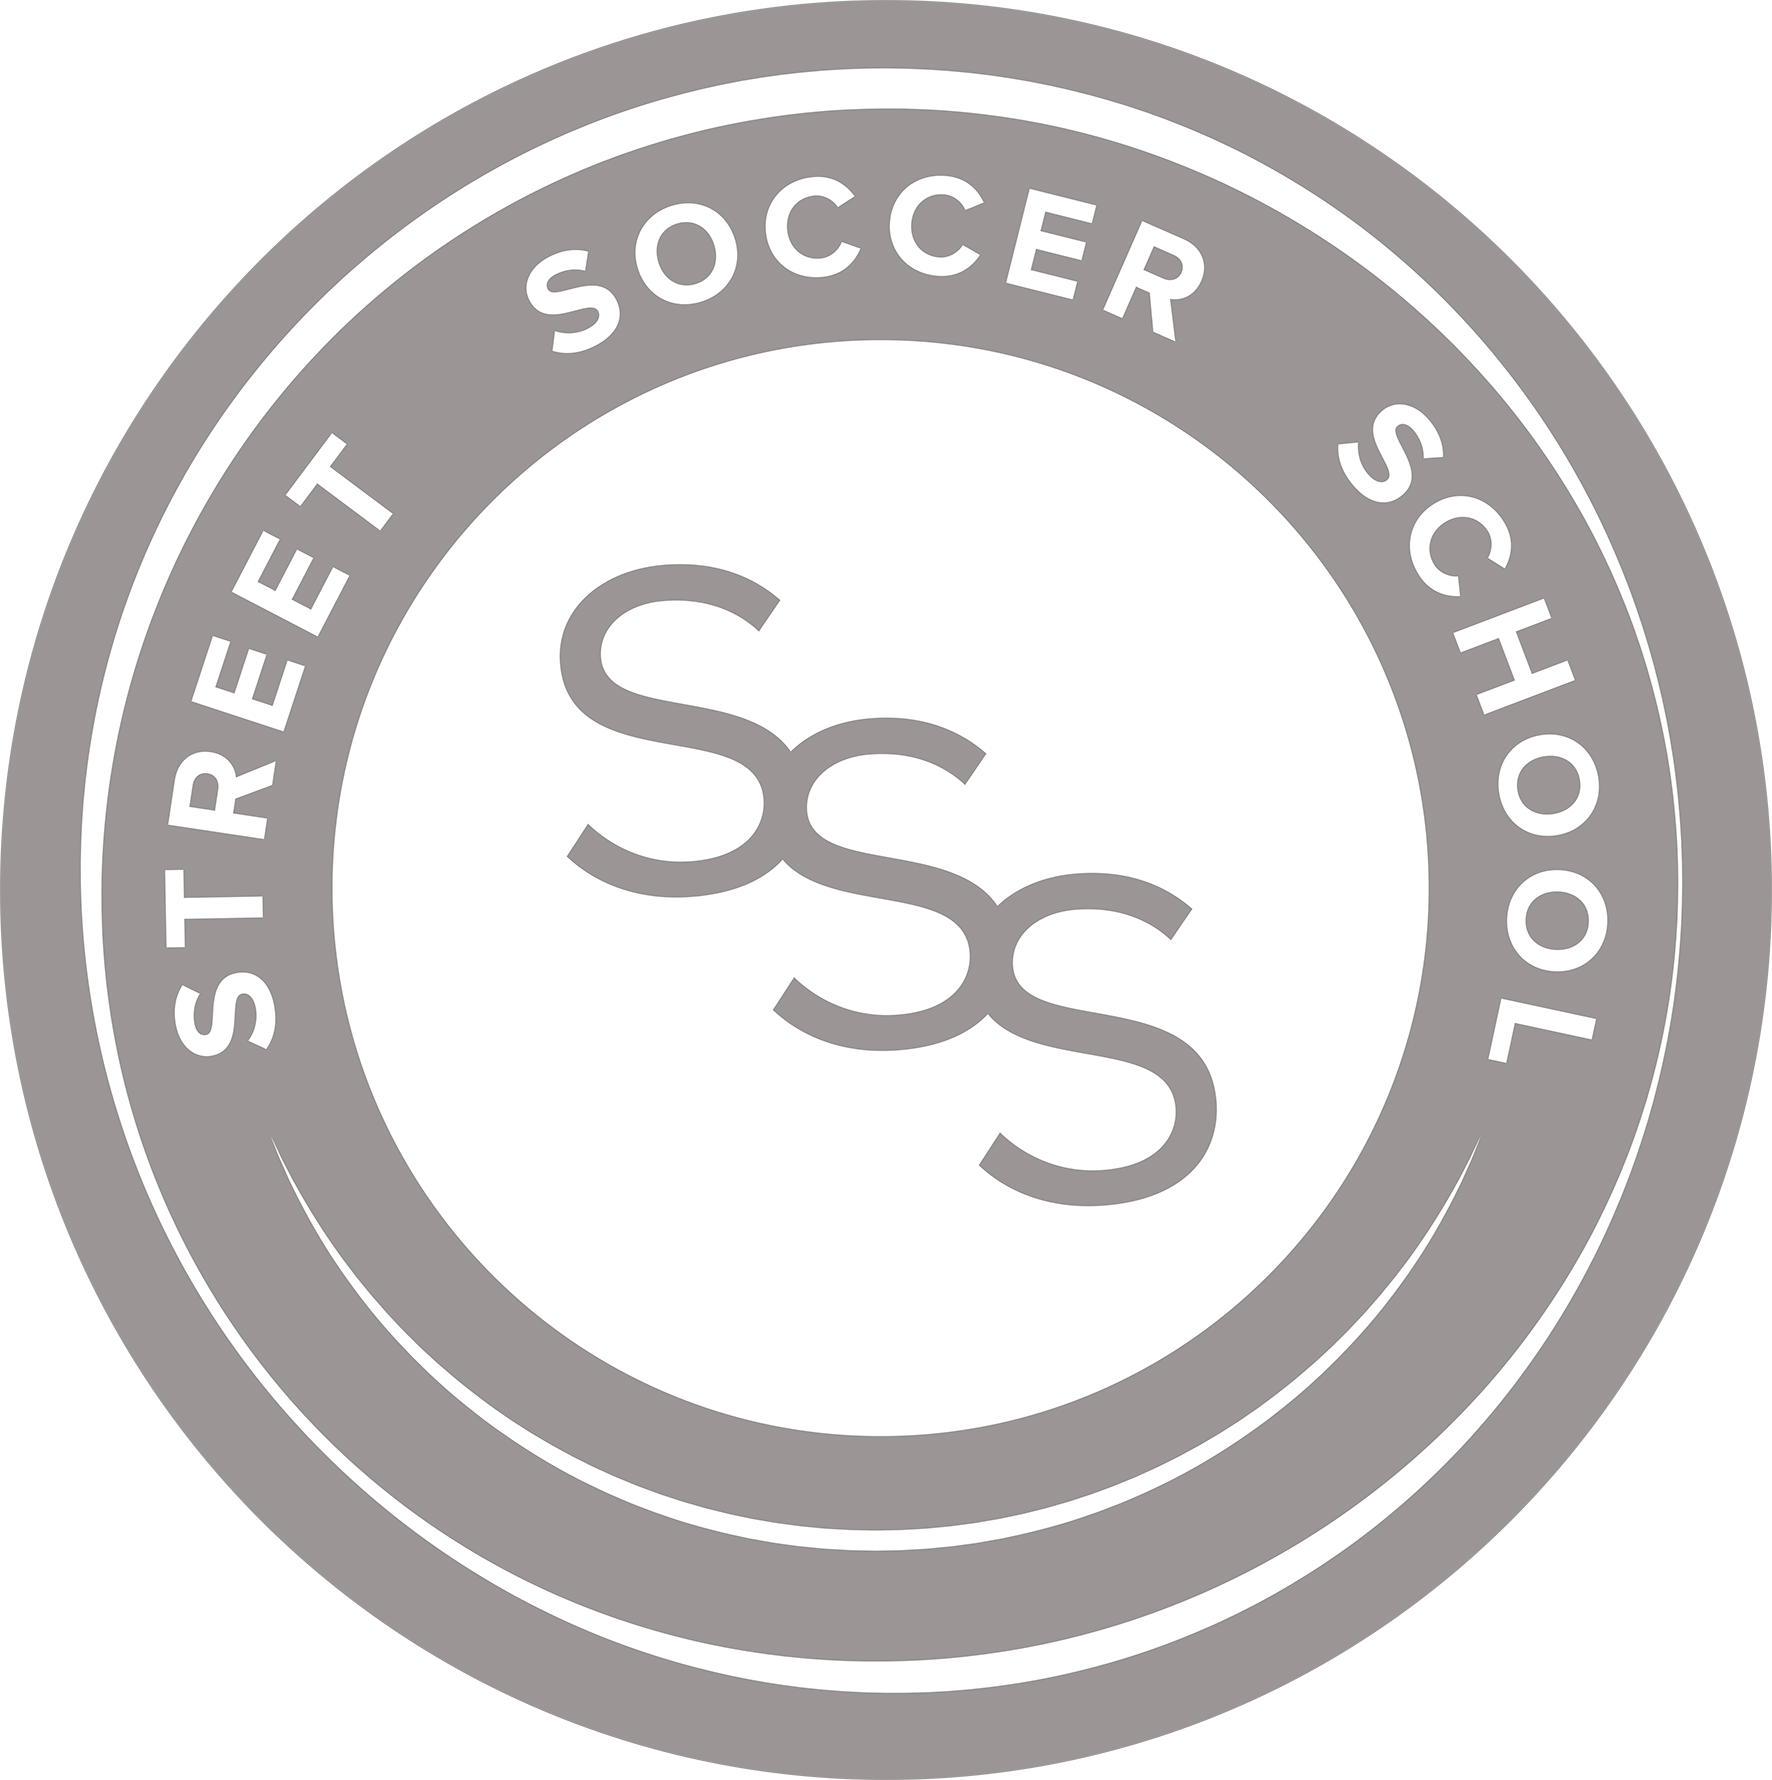 Street Soccer School